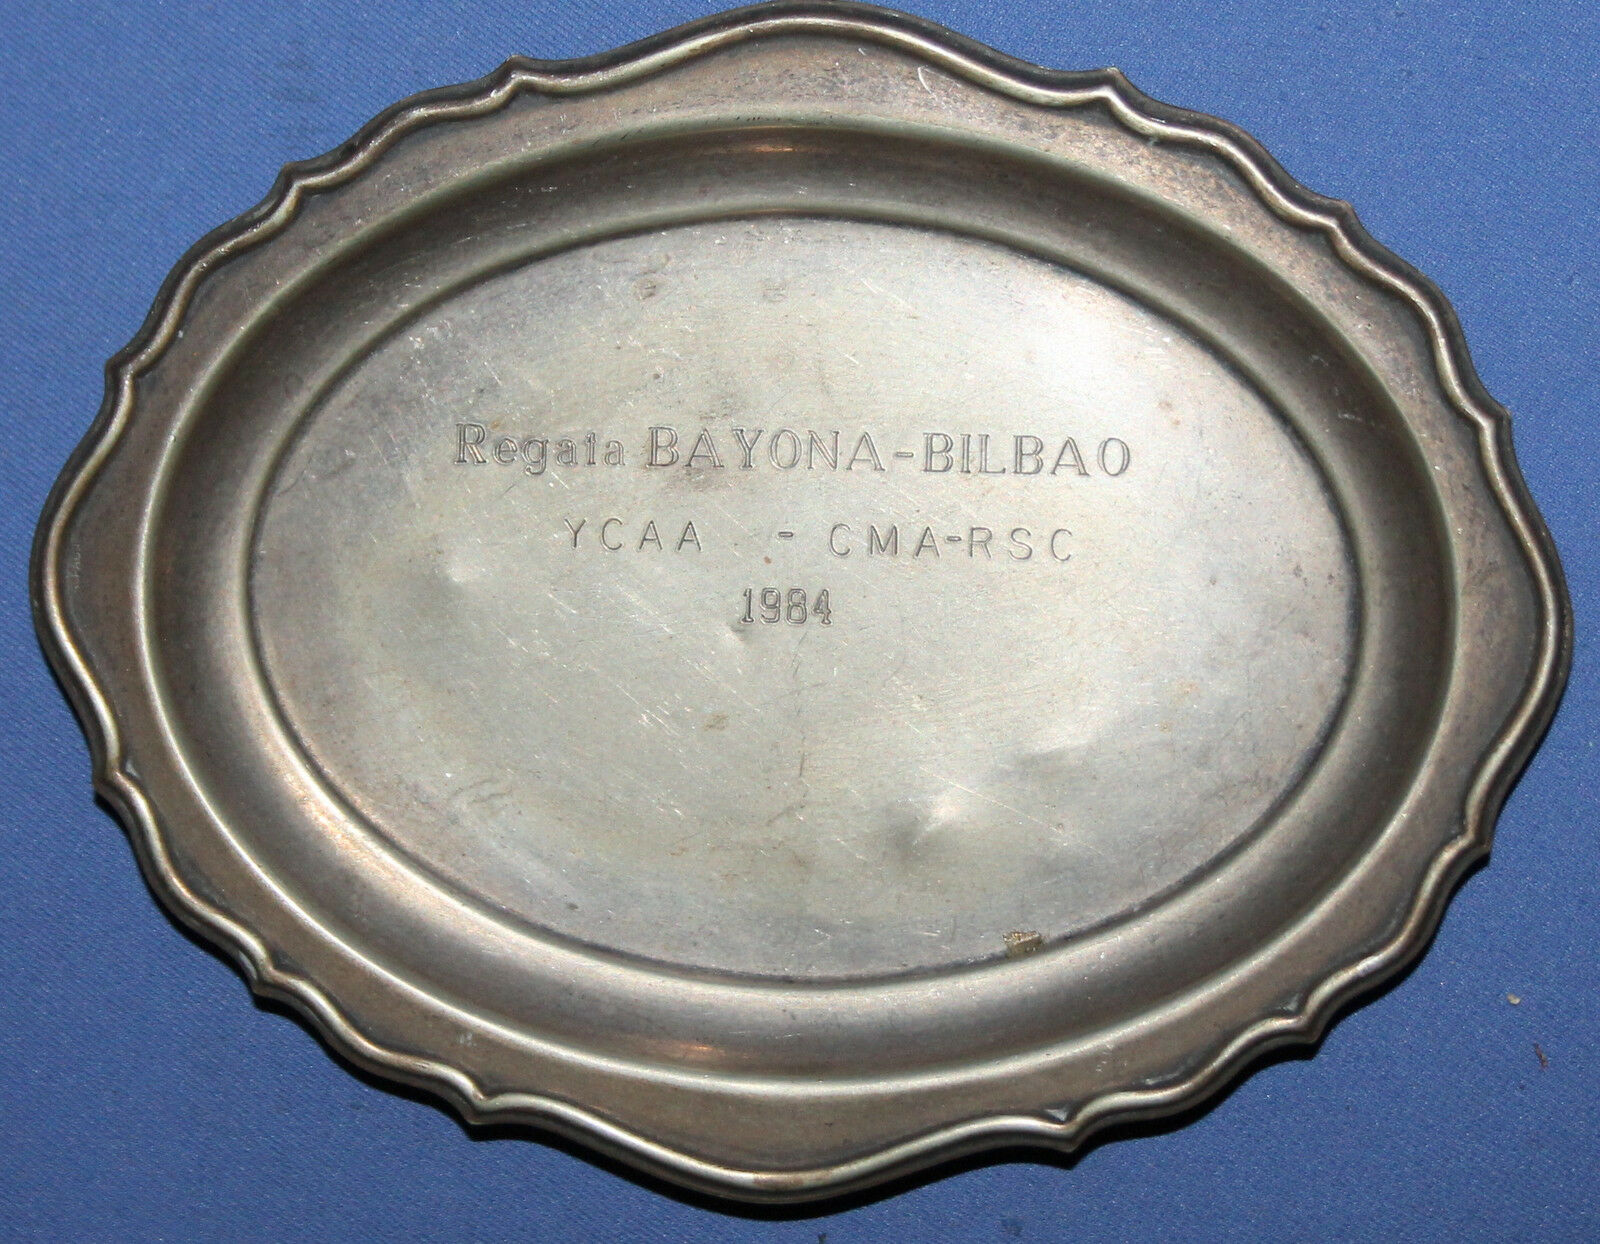 1984 Regatta Bayonne - Bilbao Small Silver Plated Tray